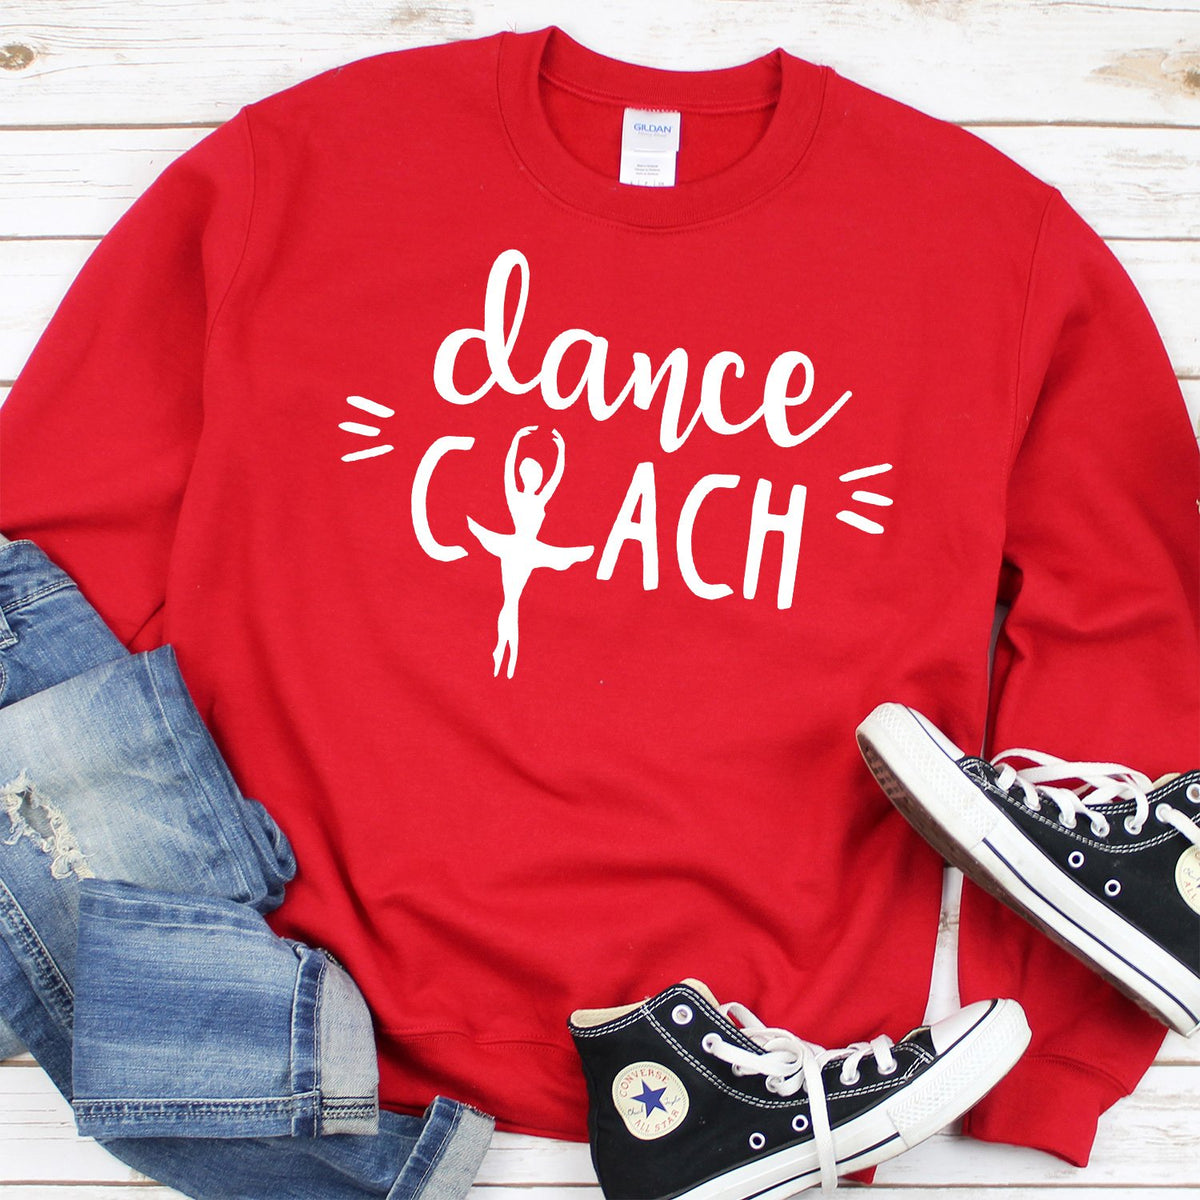 Dance Coach - Long Sleeve Heavy Crewneck Sweatshirt